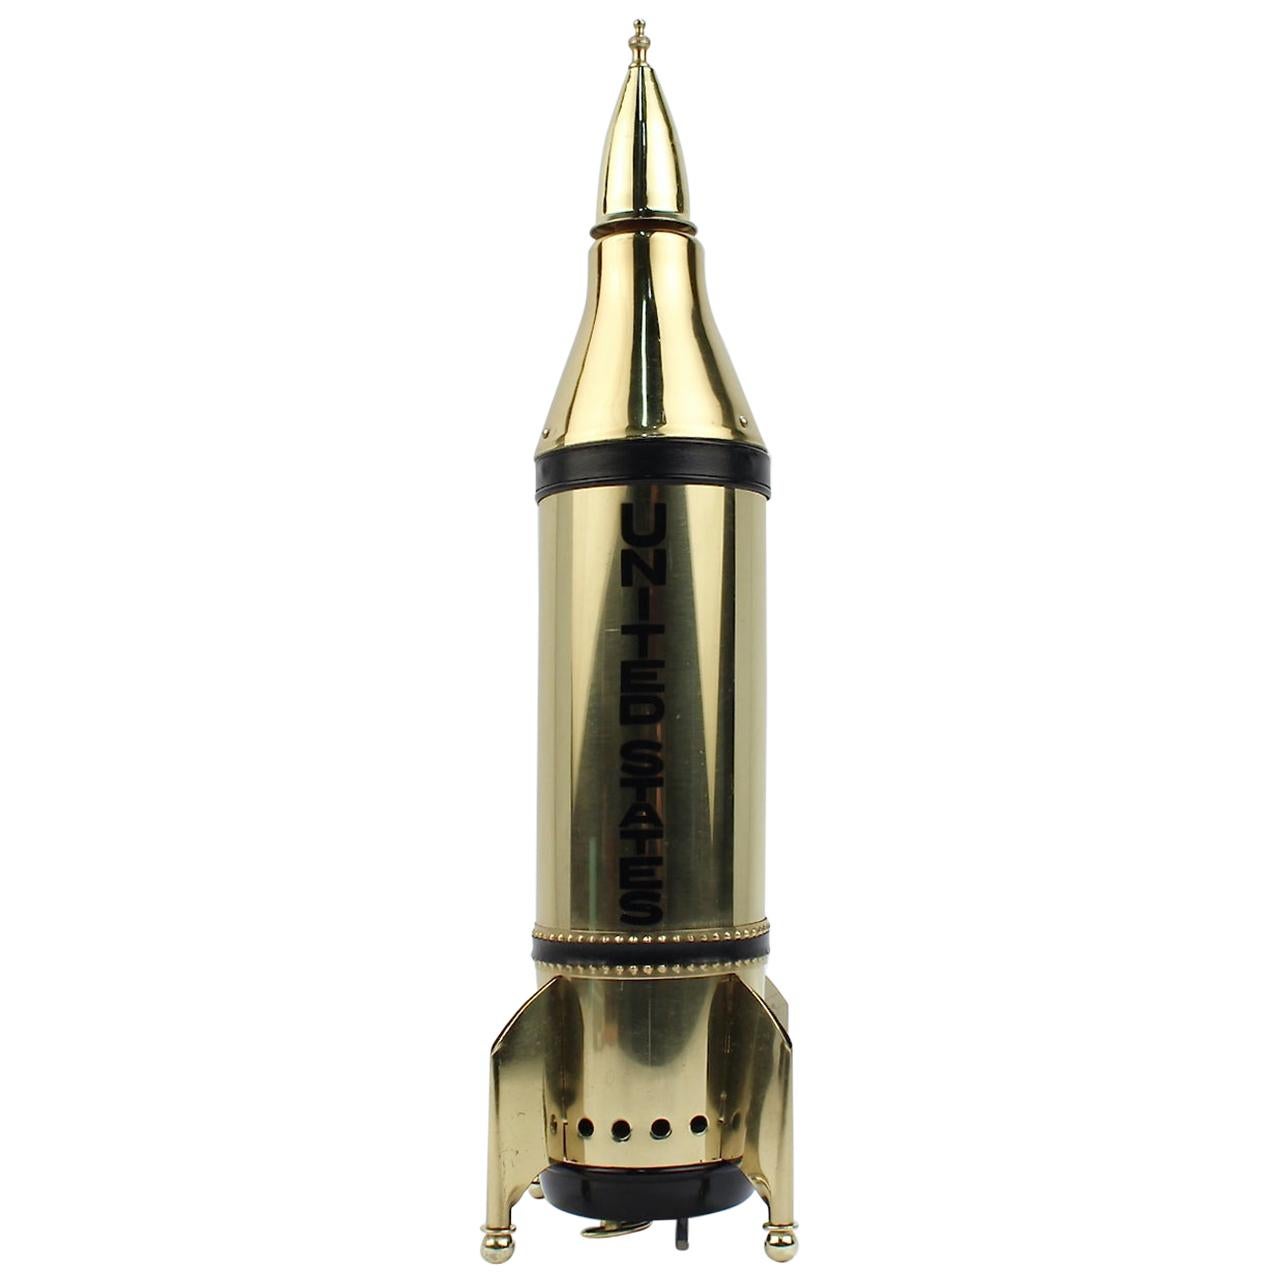 Space Age Brass Rocket Ship Novelty Decanter or Liquor Bottle